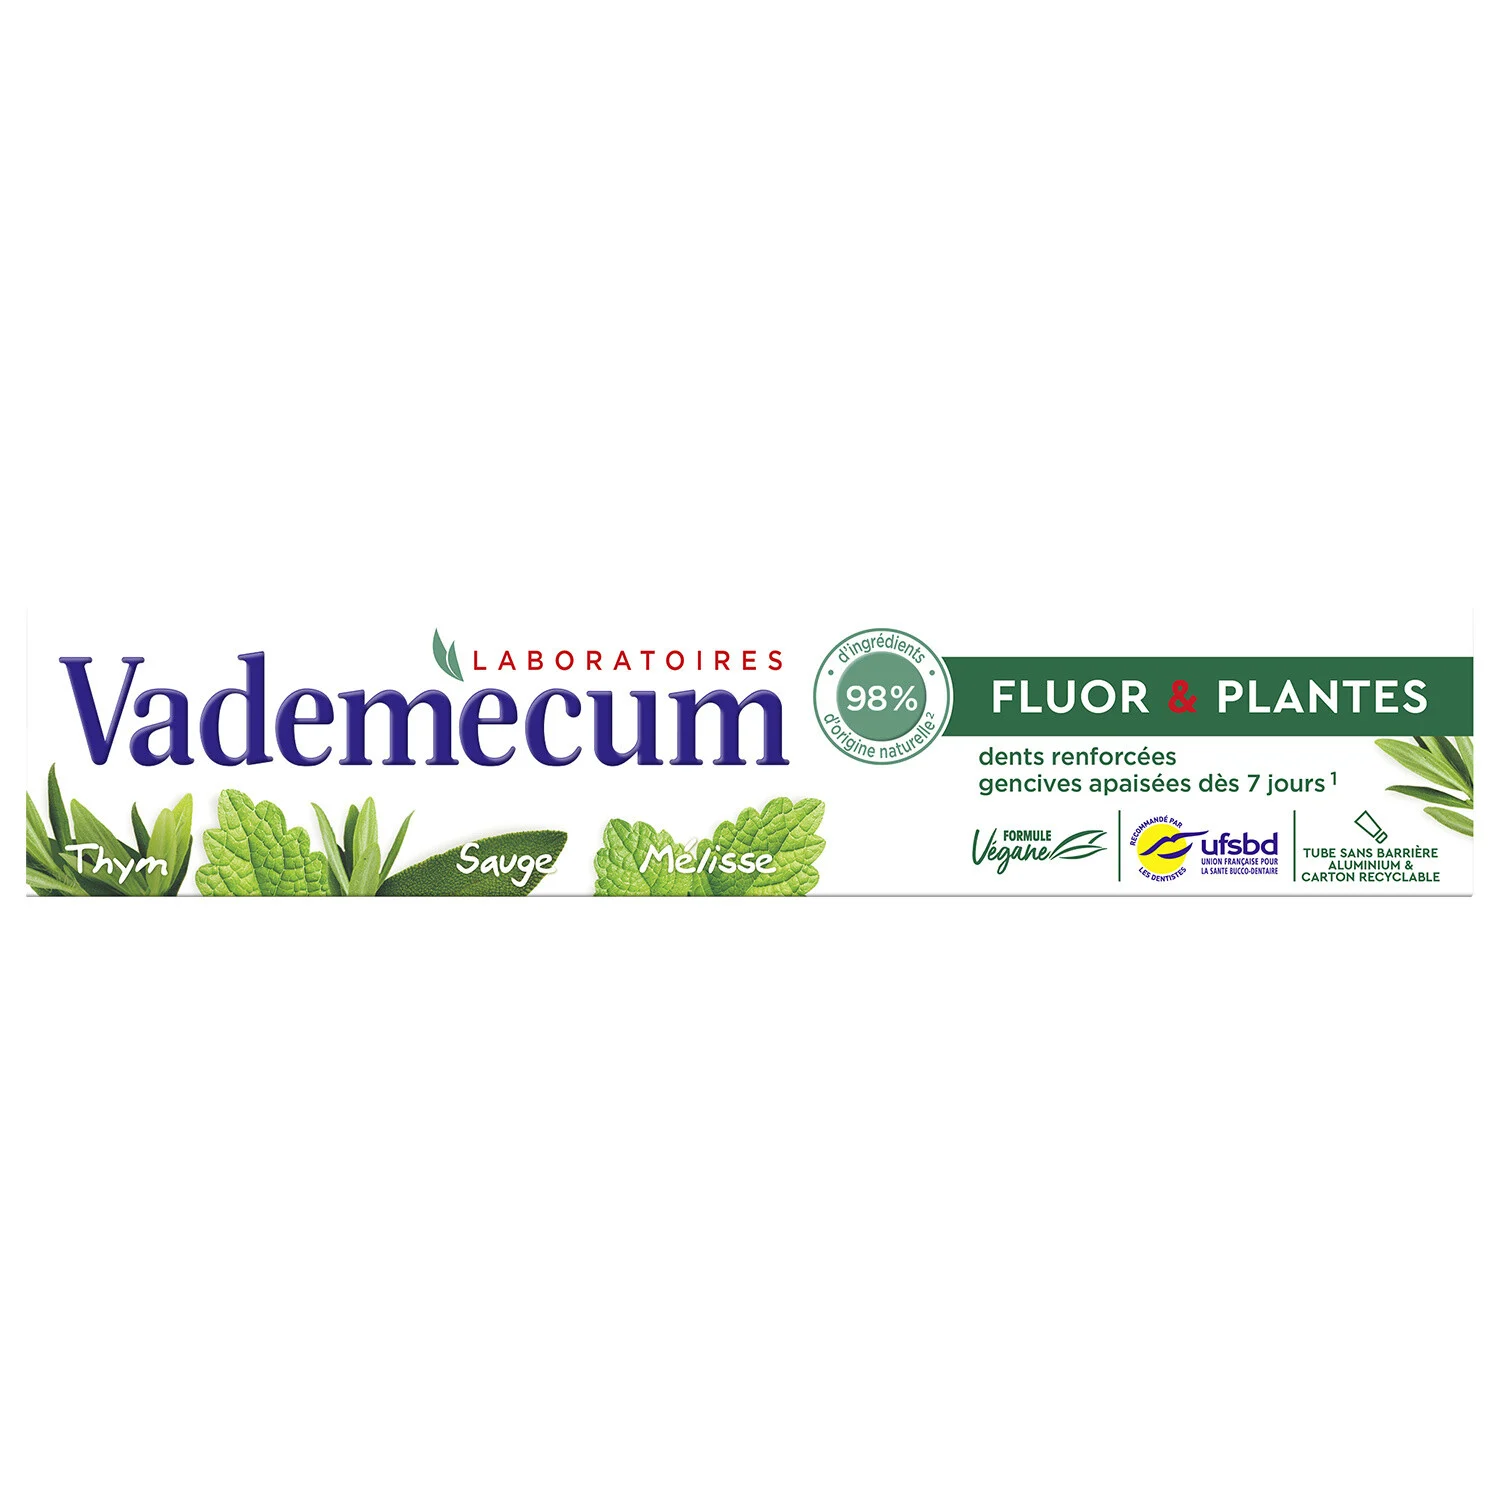 75 мл Dent Fluor Plant Vademecu